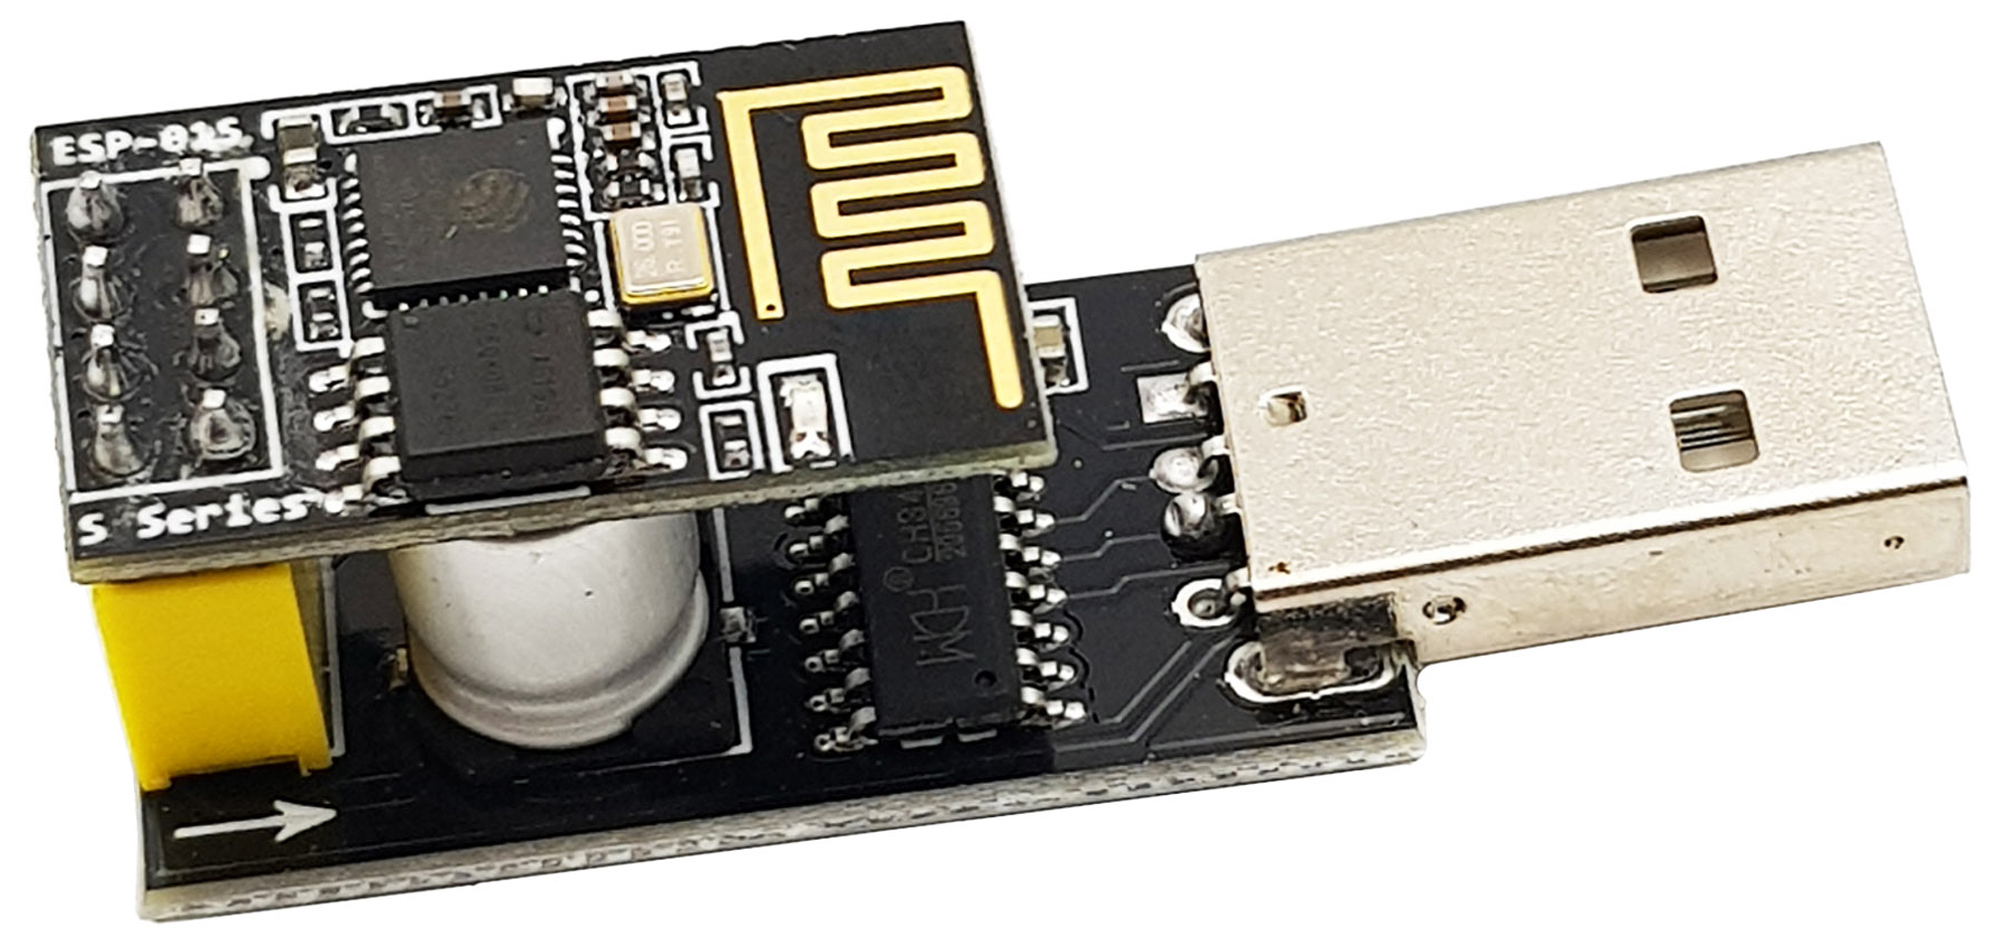 USB Adapter Mạch Thu Phát Wifi ESP8266 Uart ESP-01